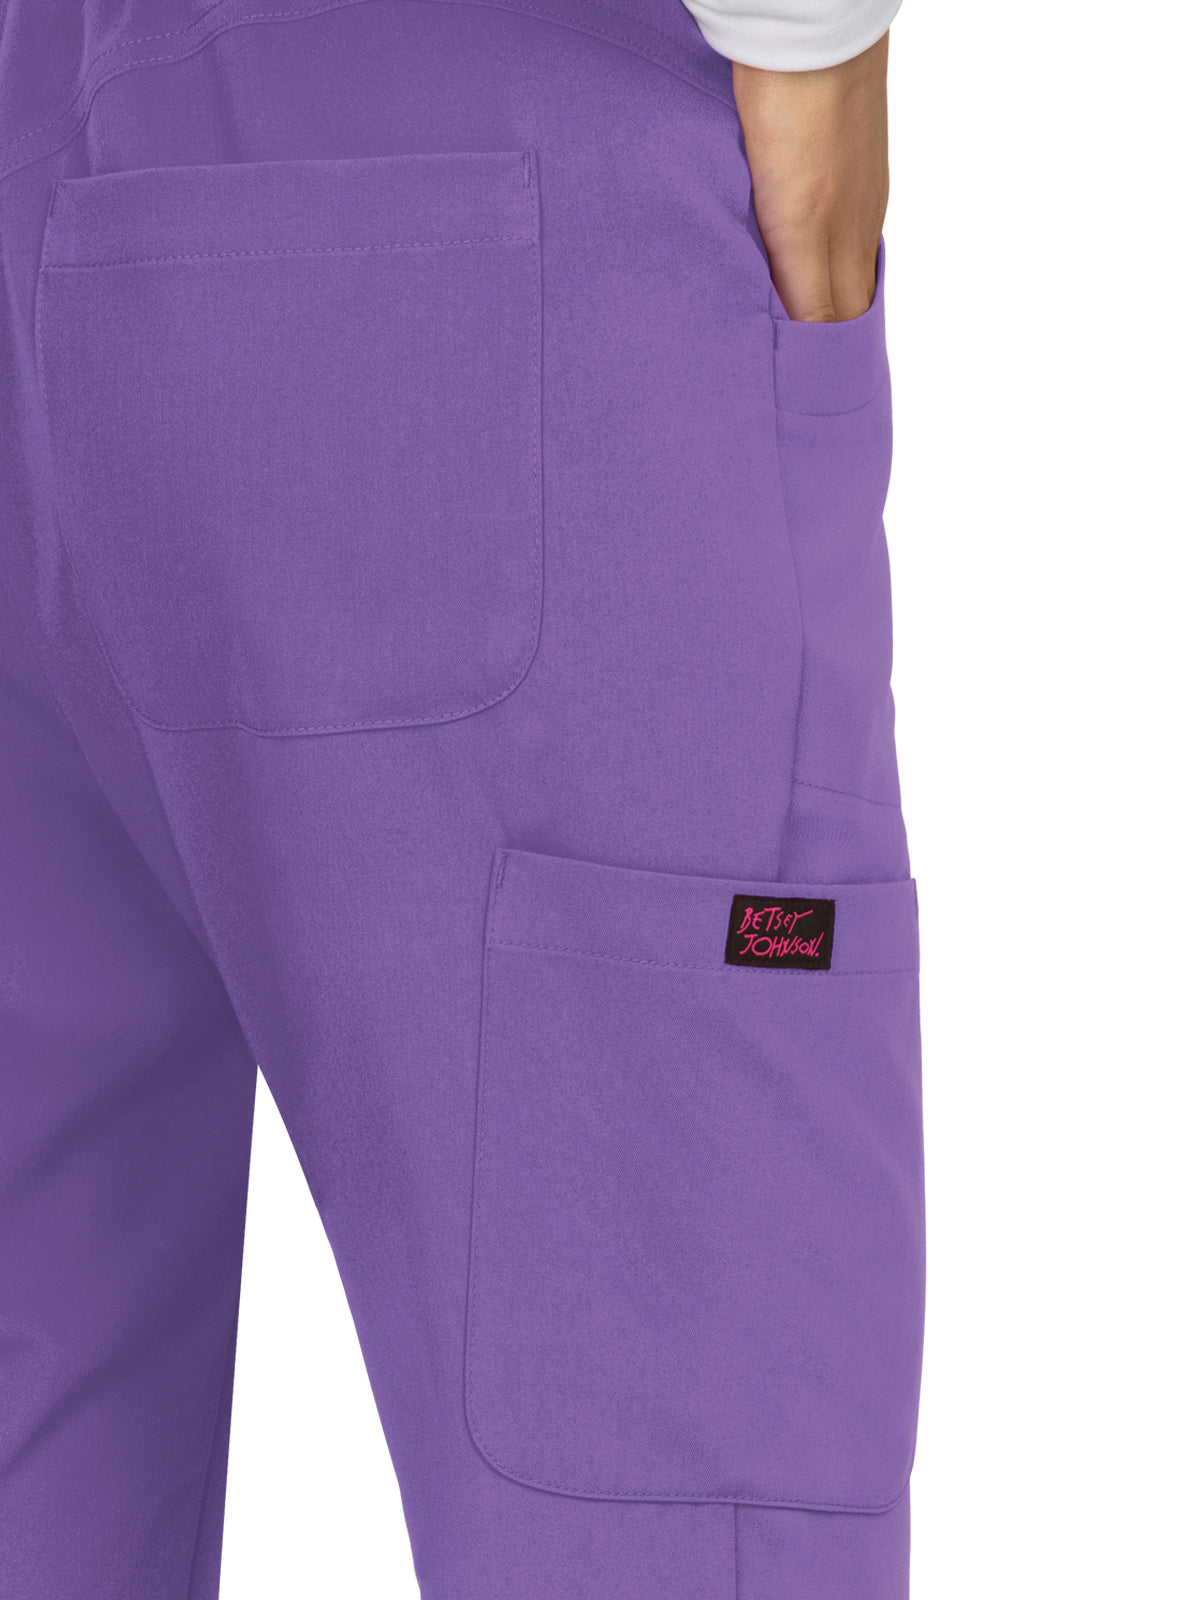 Women's 6-Pocket Pant